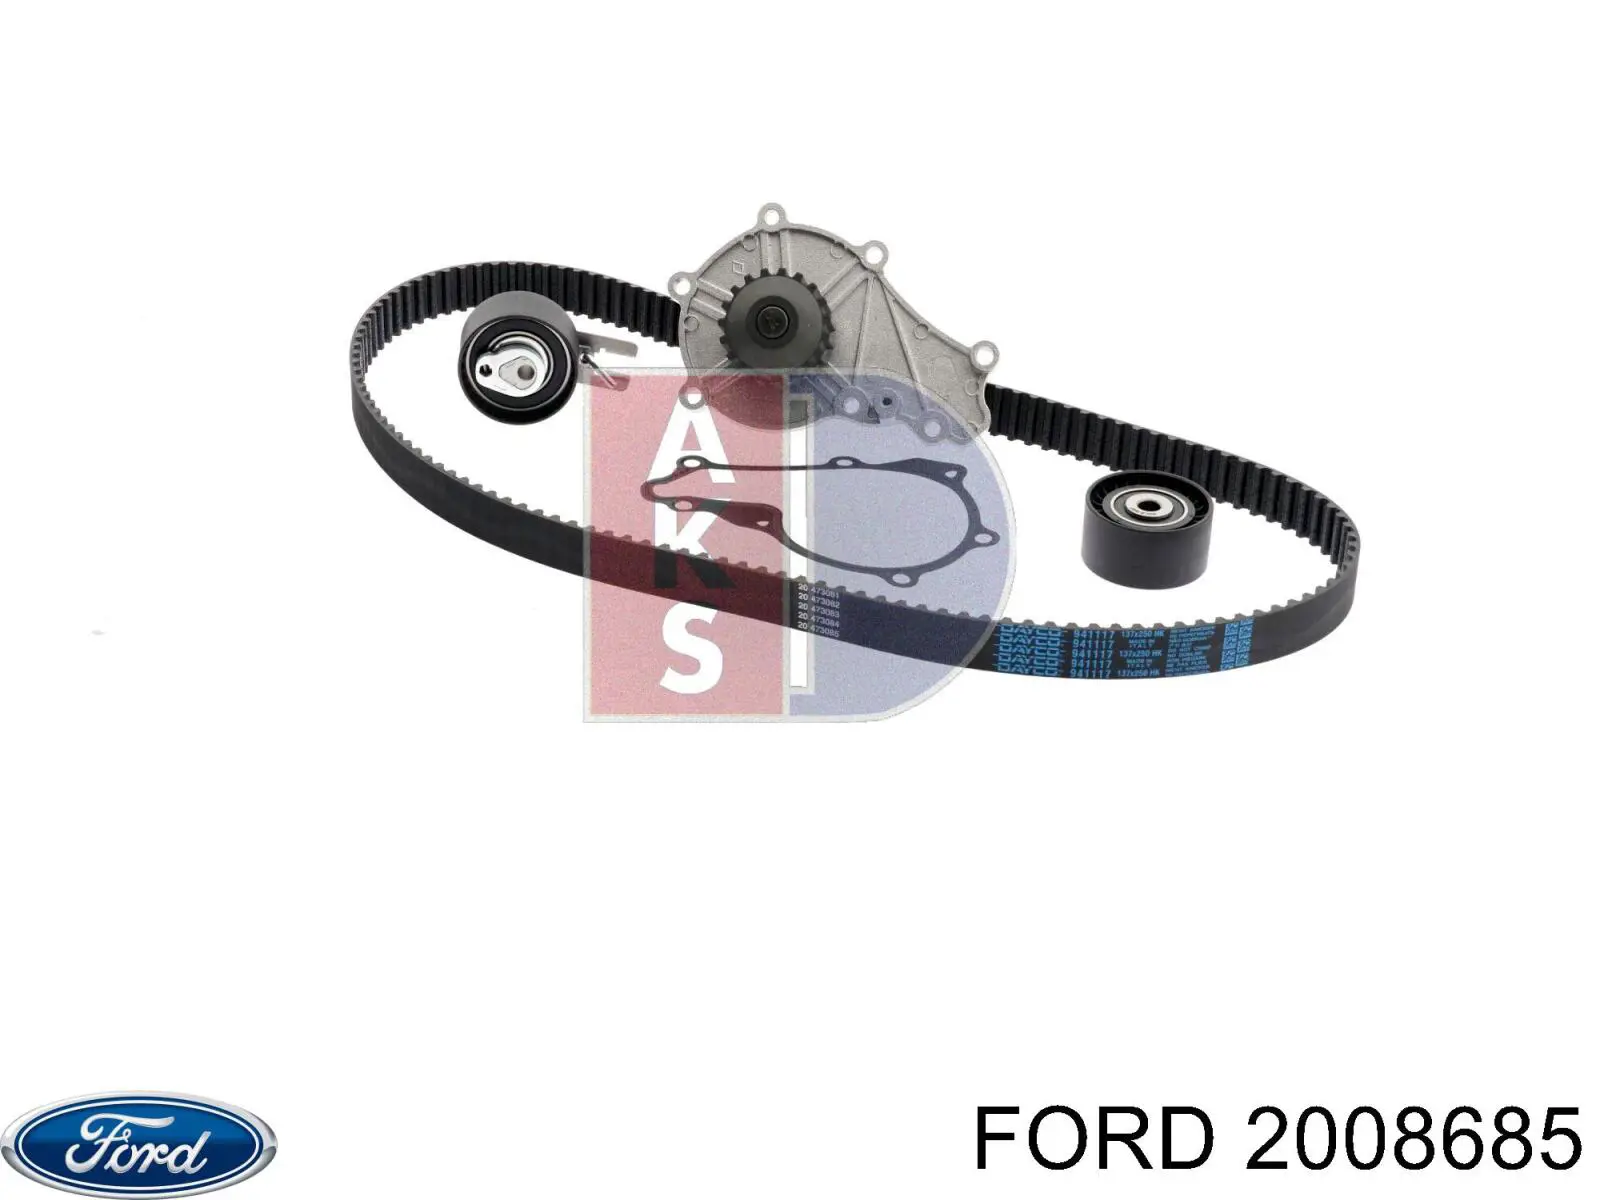 2008685 Ford комплект грм